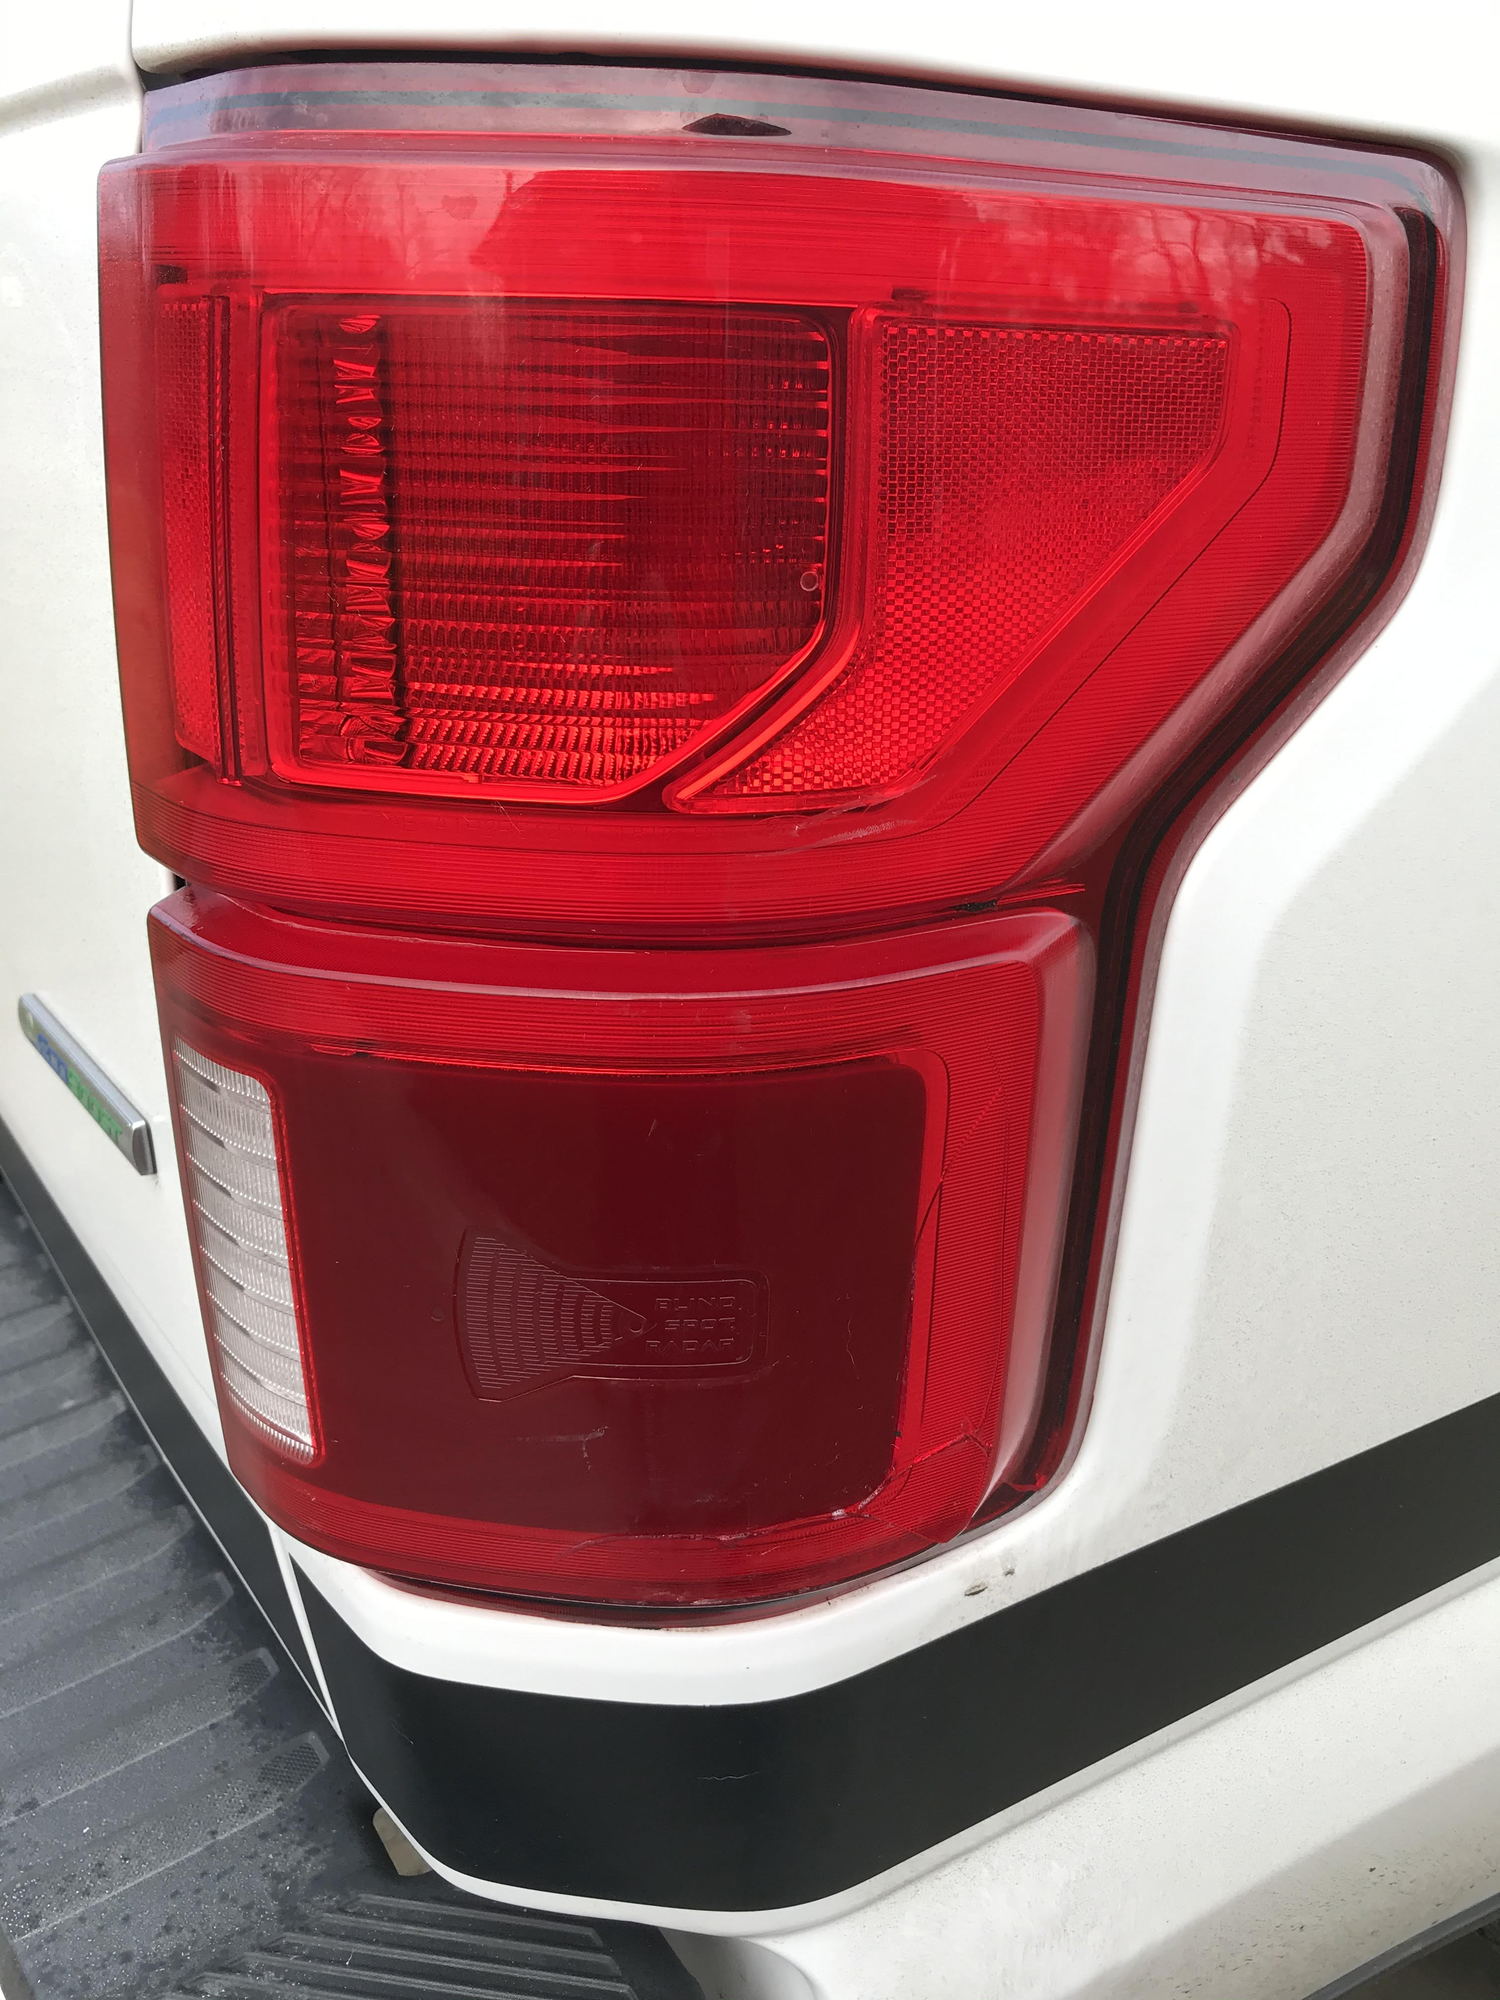 2019 Sport - Broken Tail Light W/ Blind Spot - Ford F150 Forum ...